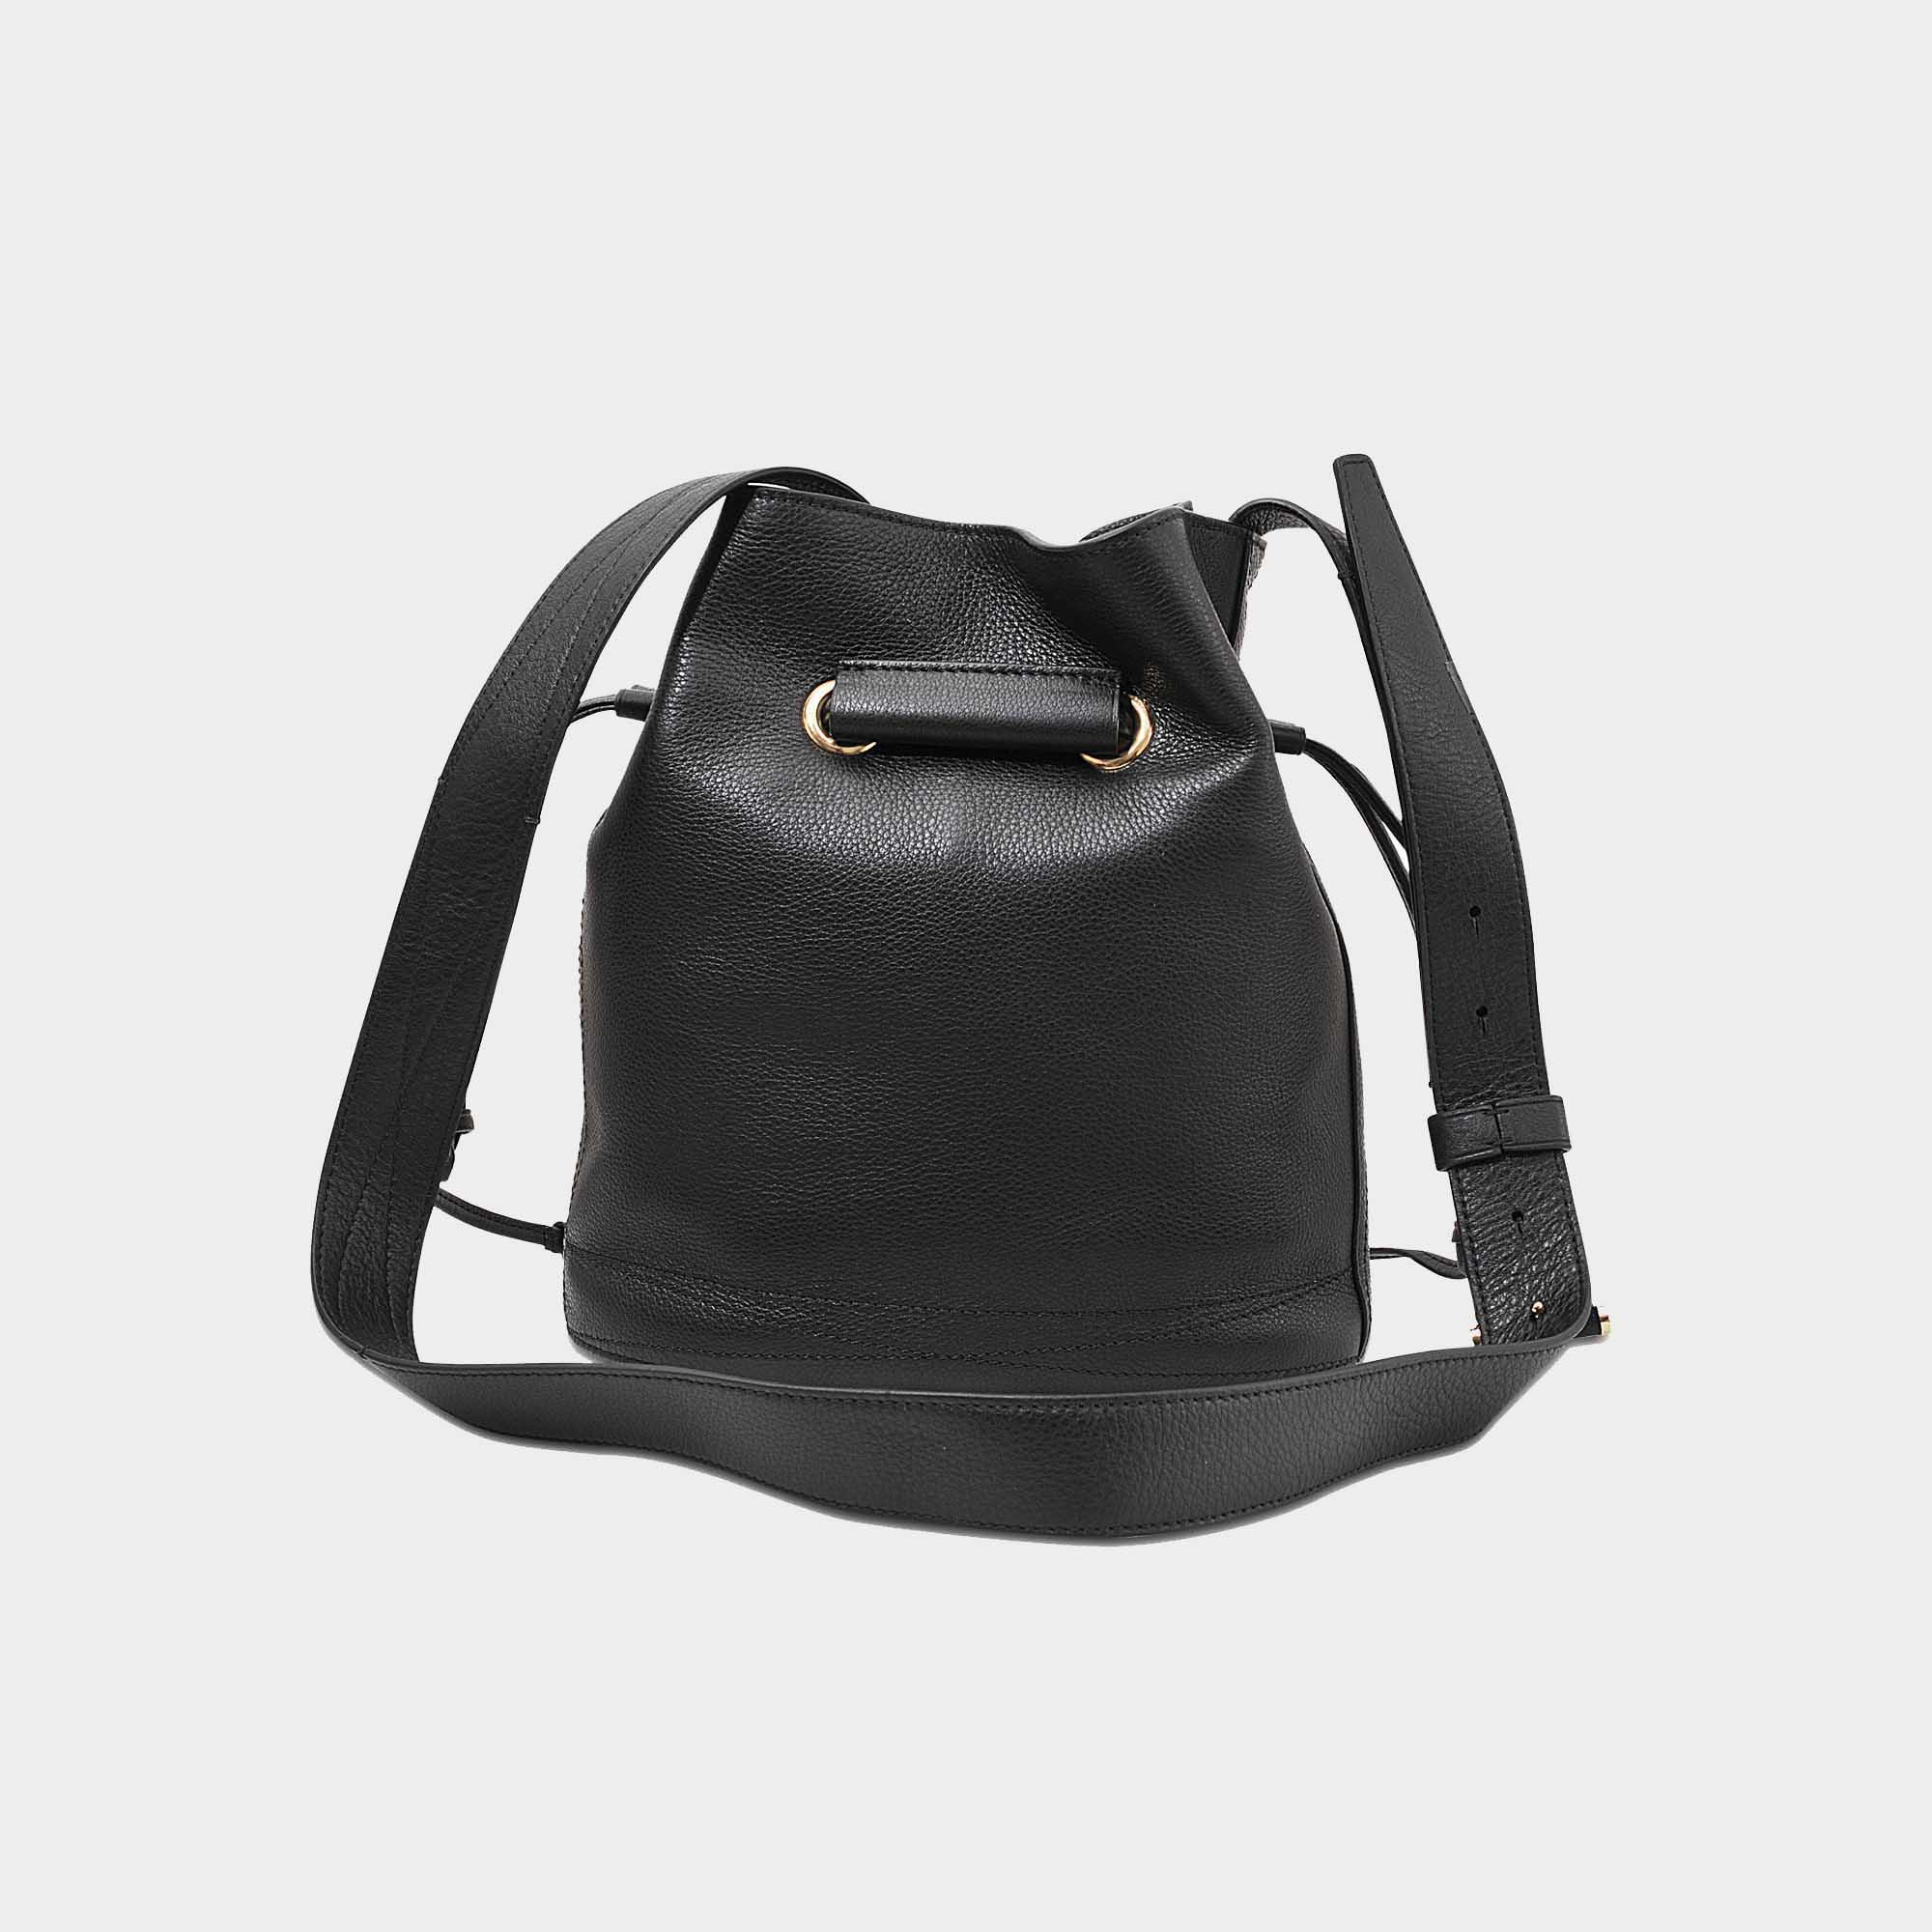 Lyst - Lancel Huit Small Bucket Bag in Black